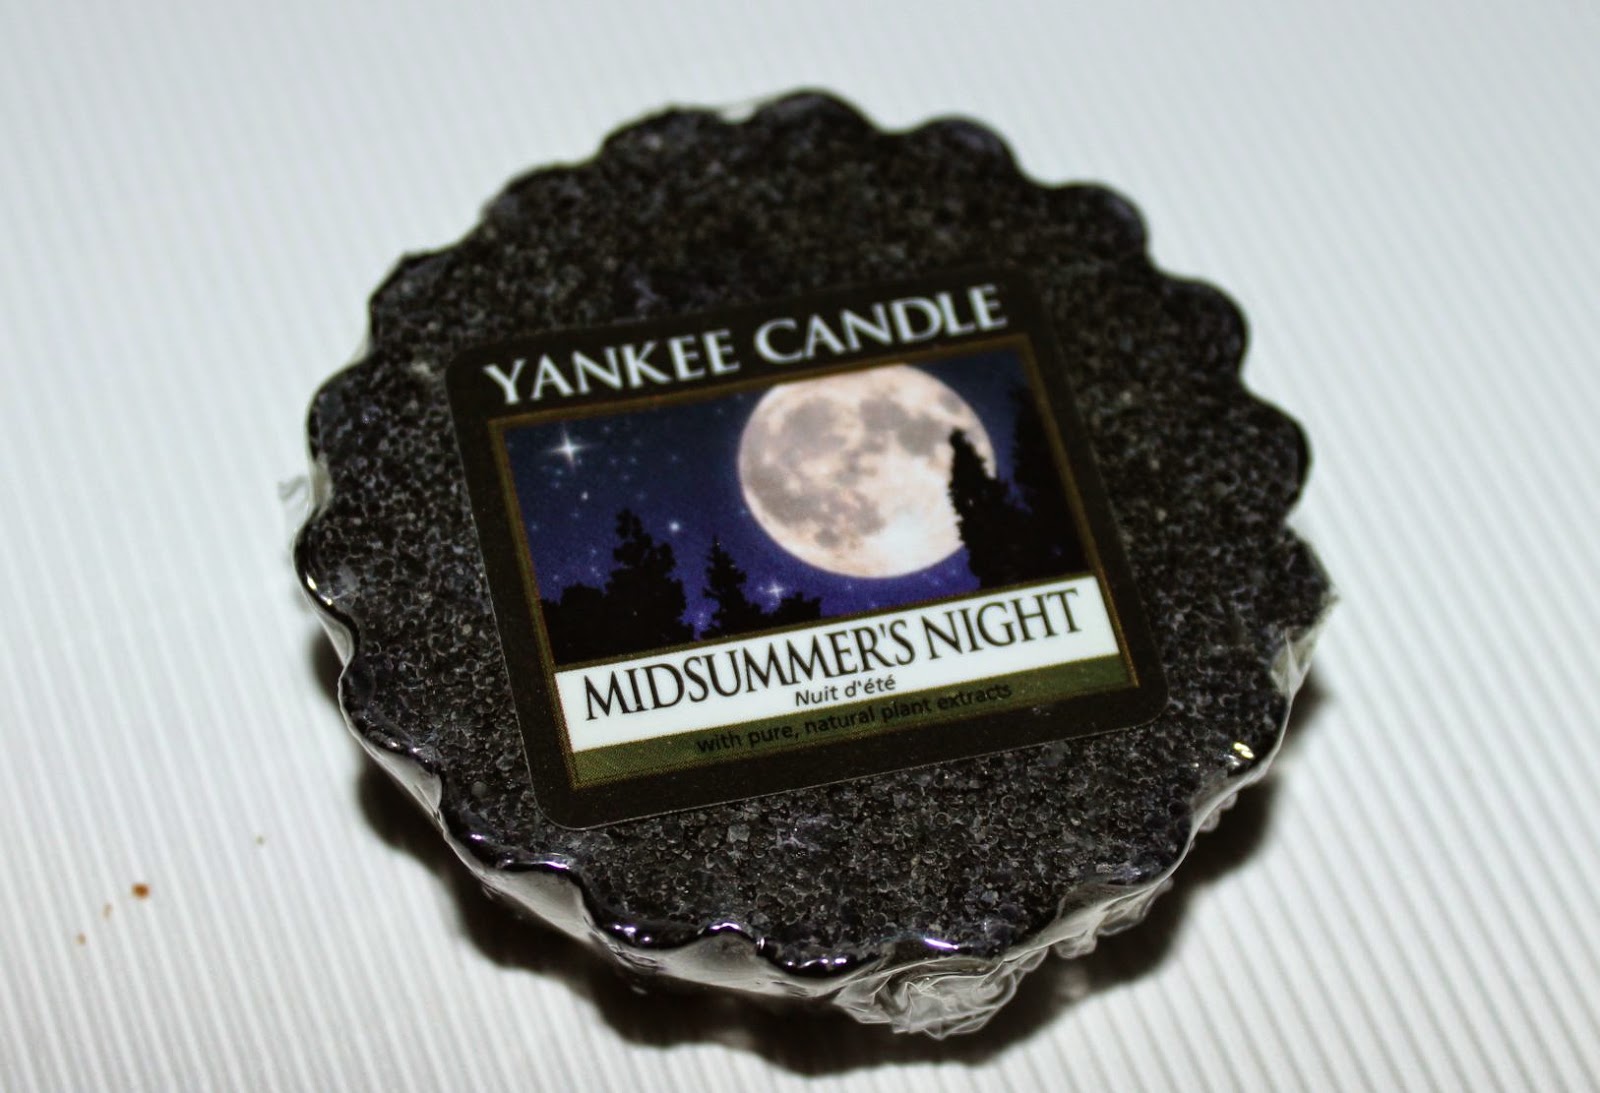 Yankee Candle Midsummer's Night czyli "męski wosk"